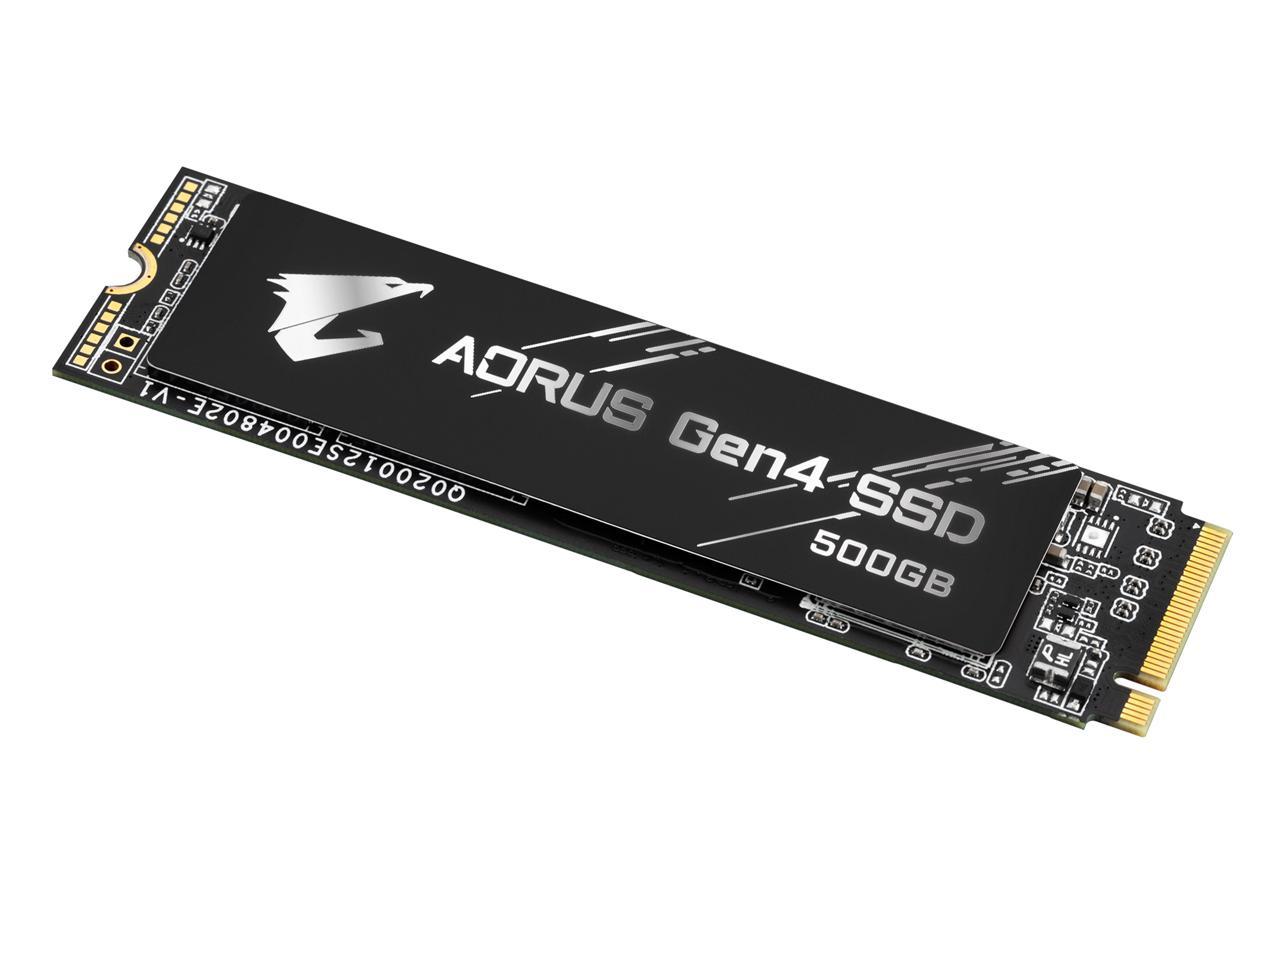 Gigabyte Aorus Gen4 M.2 2280 500Gb Pci-Express 4.0 X4, Nvme 1.3 3D Tlc Internal Solid State Drive (Ssd) Gp-Ag4500G